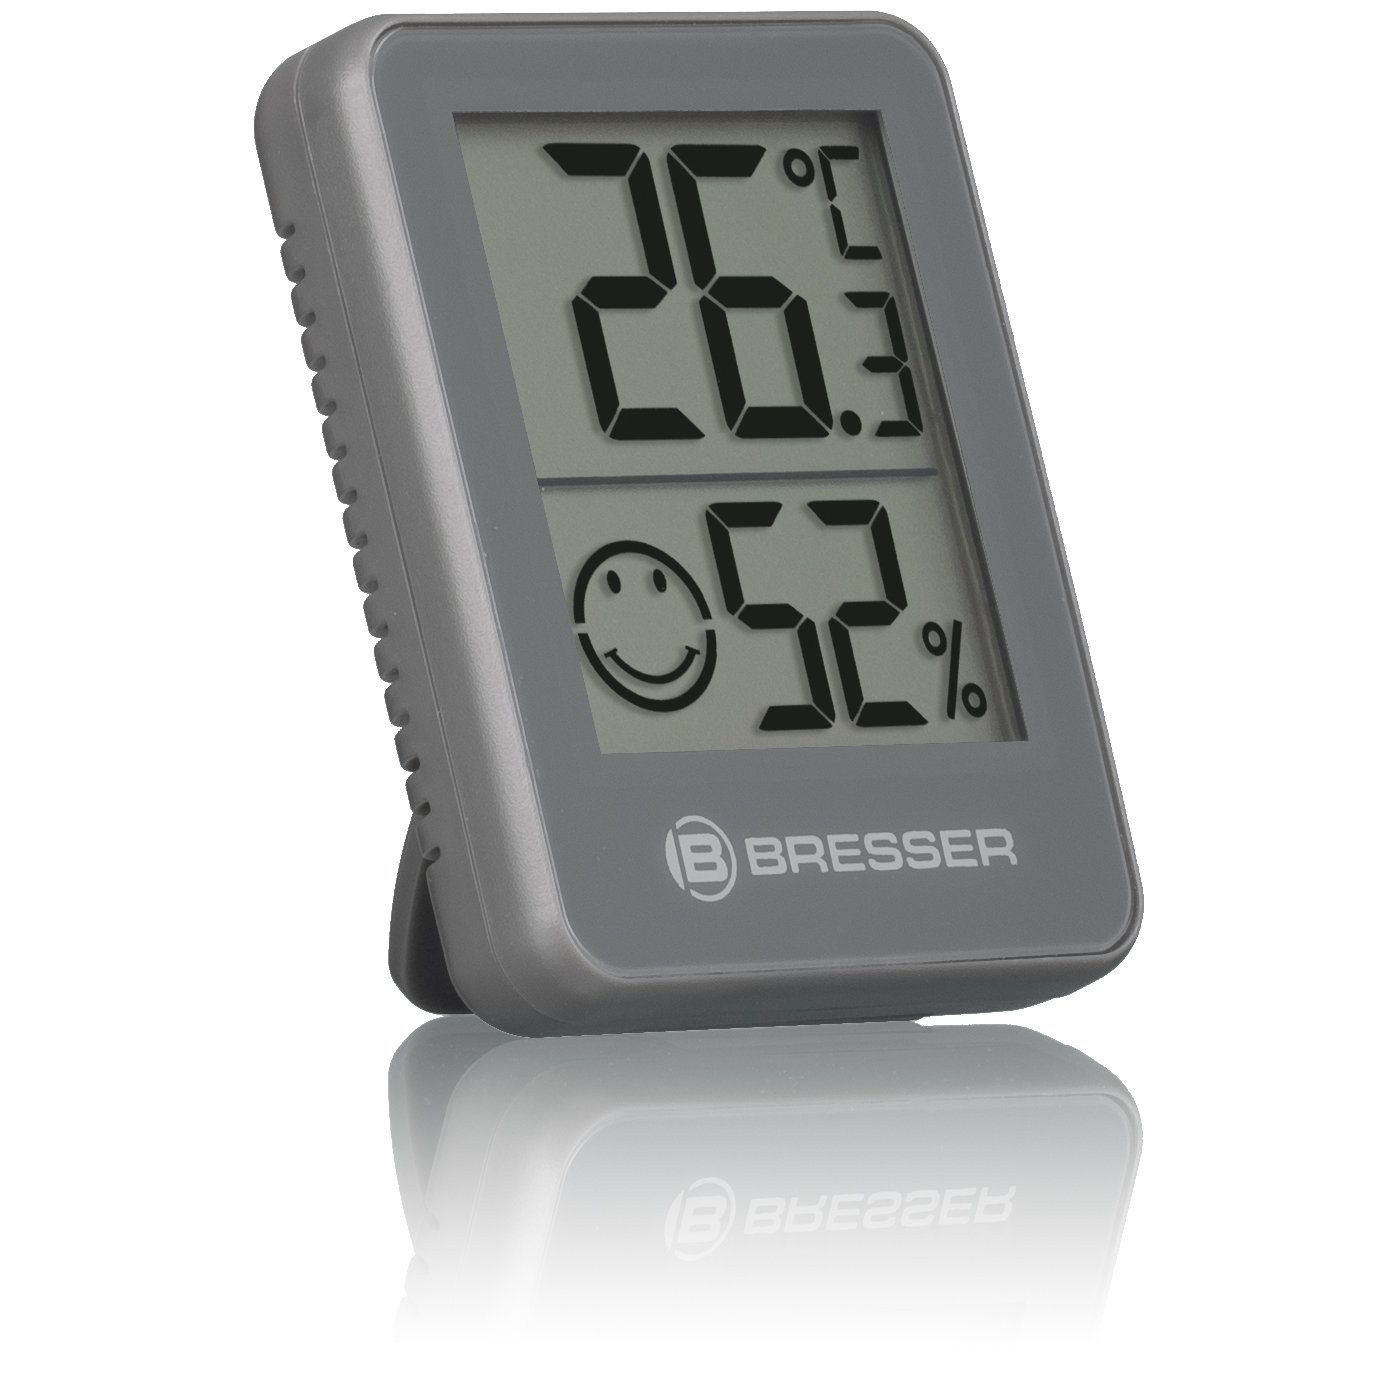 Temeo Hygro Thermo-/Hygrometer Hygrometer Indikator 6er-Set BRESSER